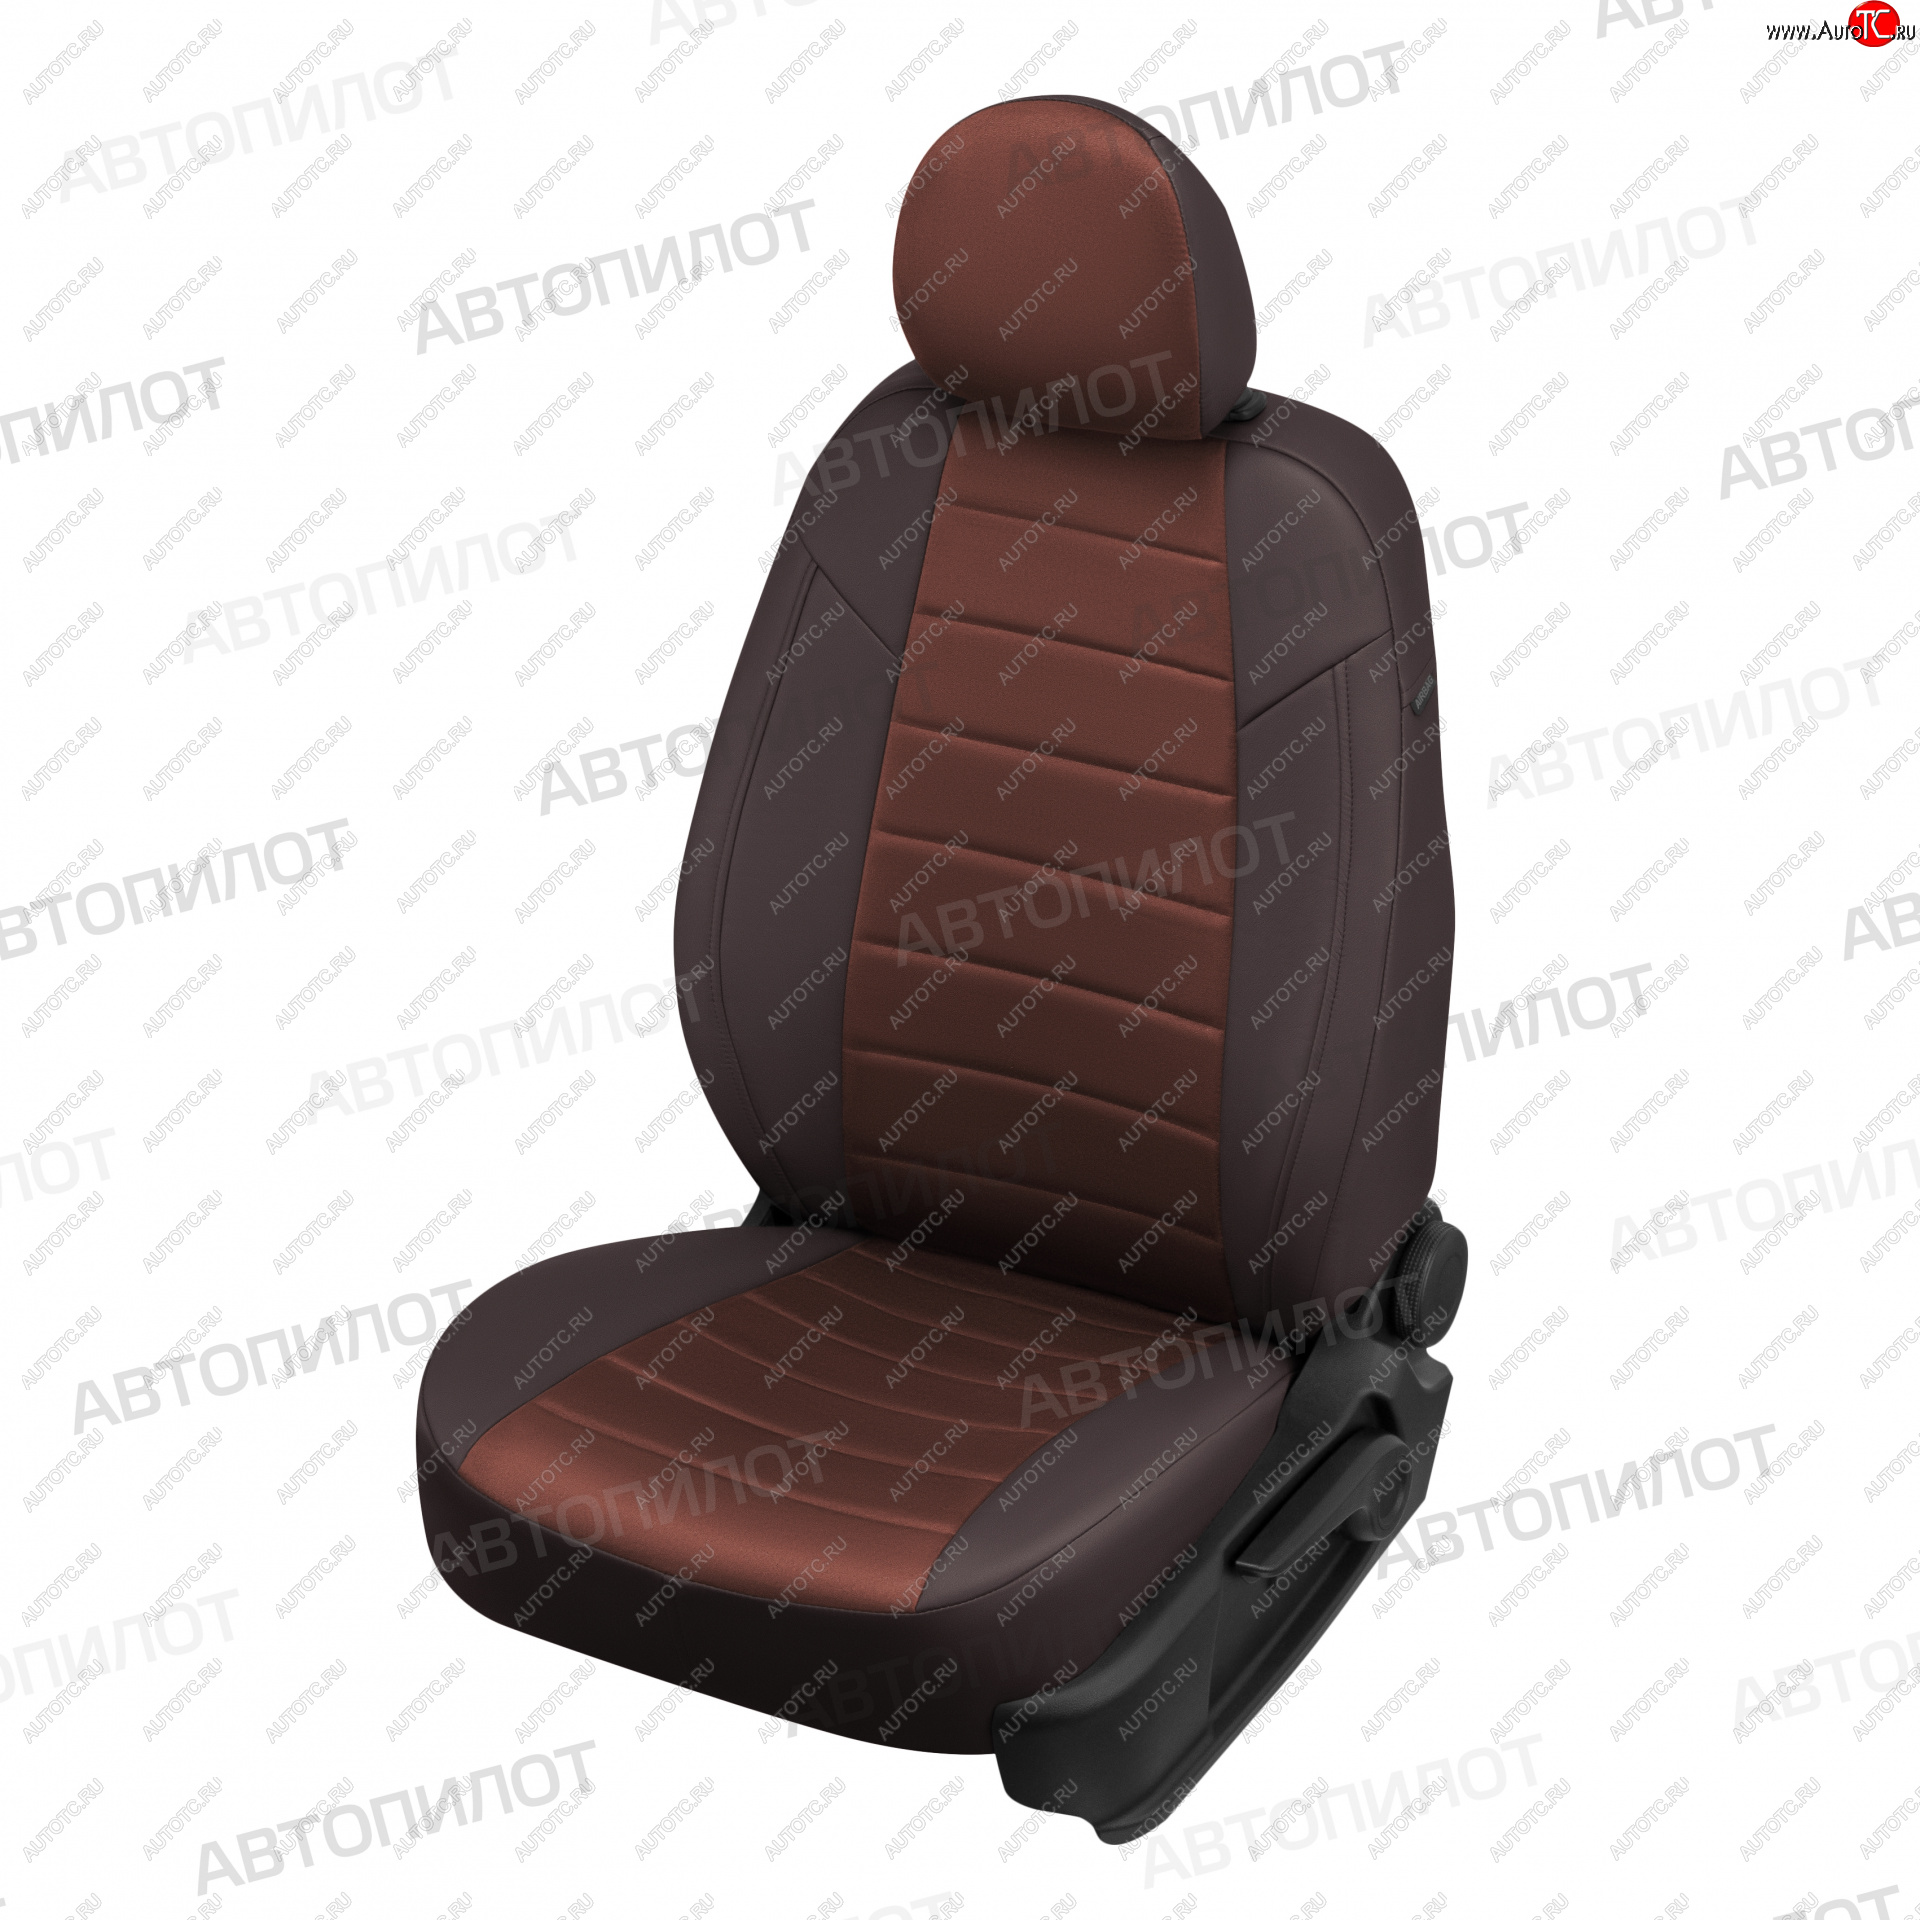 13 449 р. Чехлы сидений (экокожа/алькантара) Автопилот  Hyundai Sonata  EF (2001-2013), KIA Magentis (2000-2005) (шоколад)